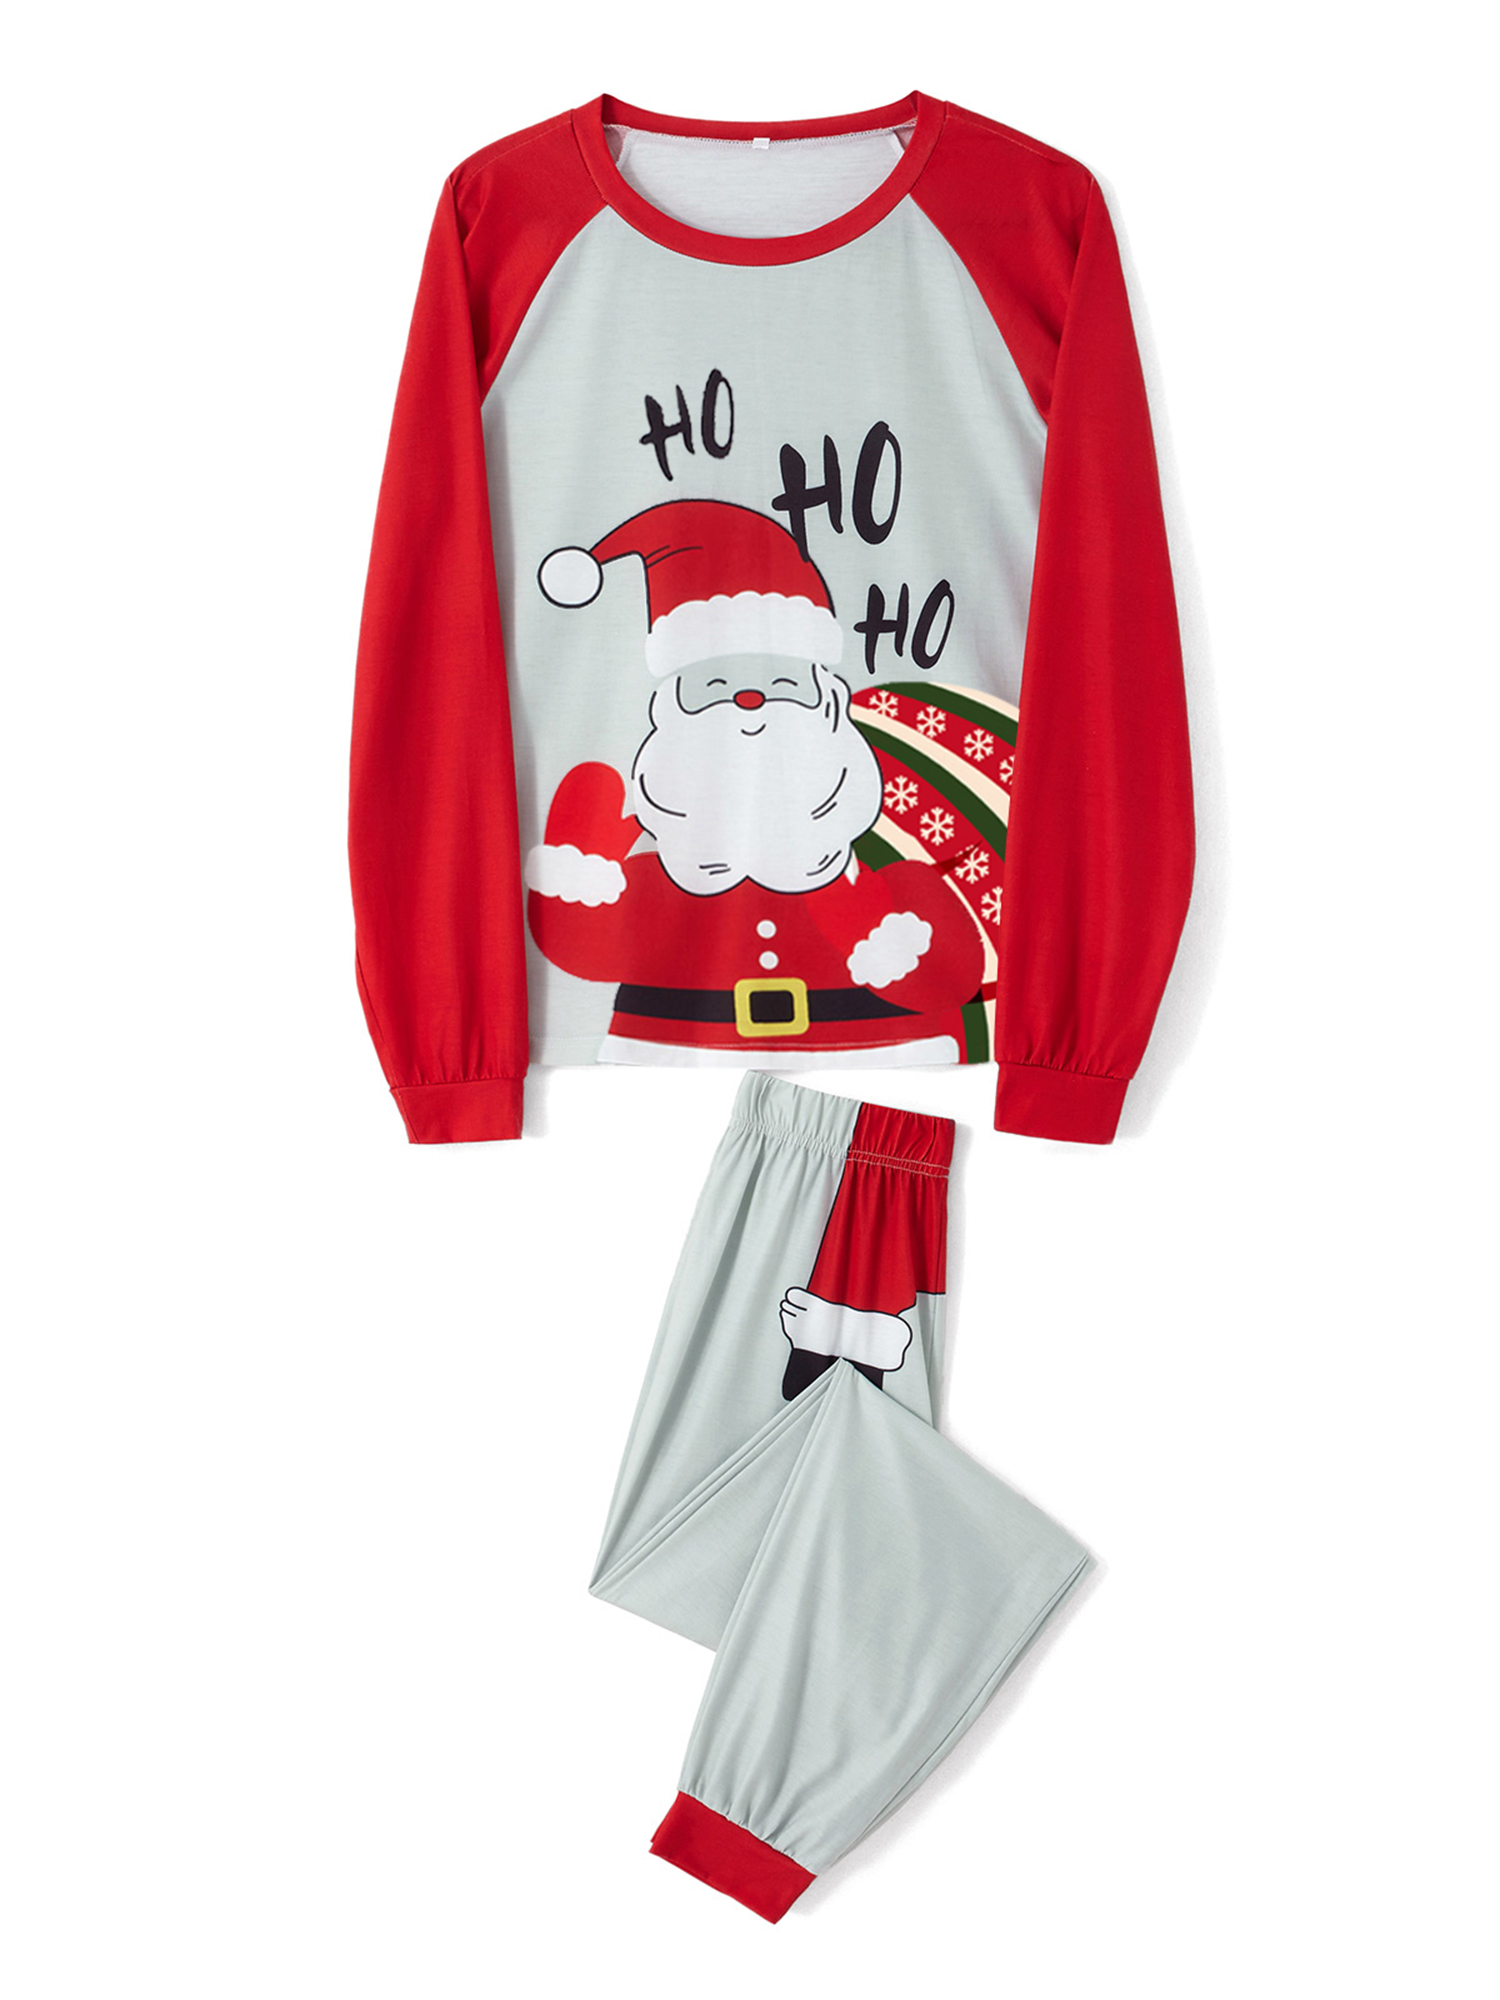 Youweixiong Matching Family Pajamas Sets Christmas PJ's Sleepwear Santa Claus Print op with Bottom Pants - image 2 of 7